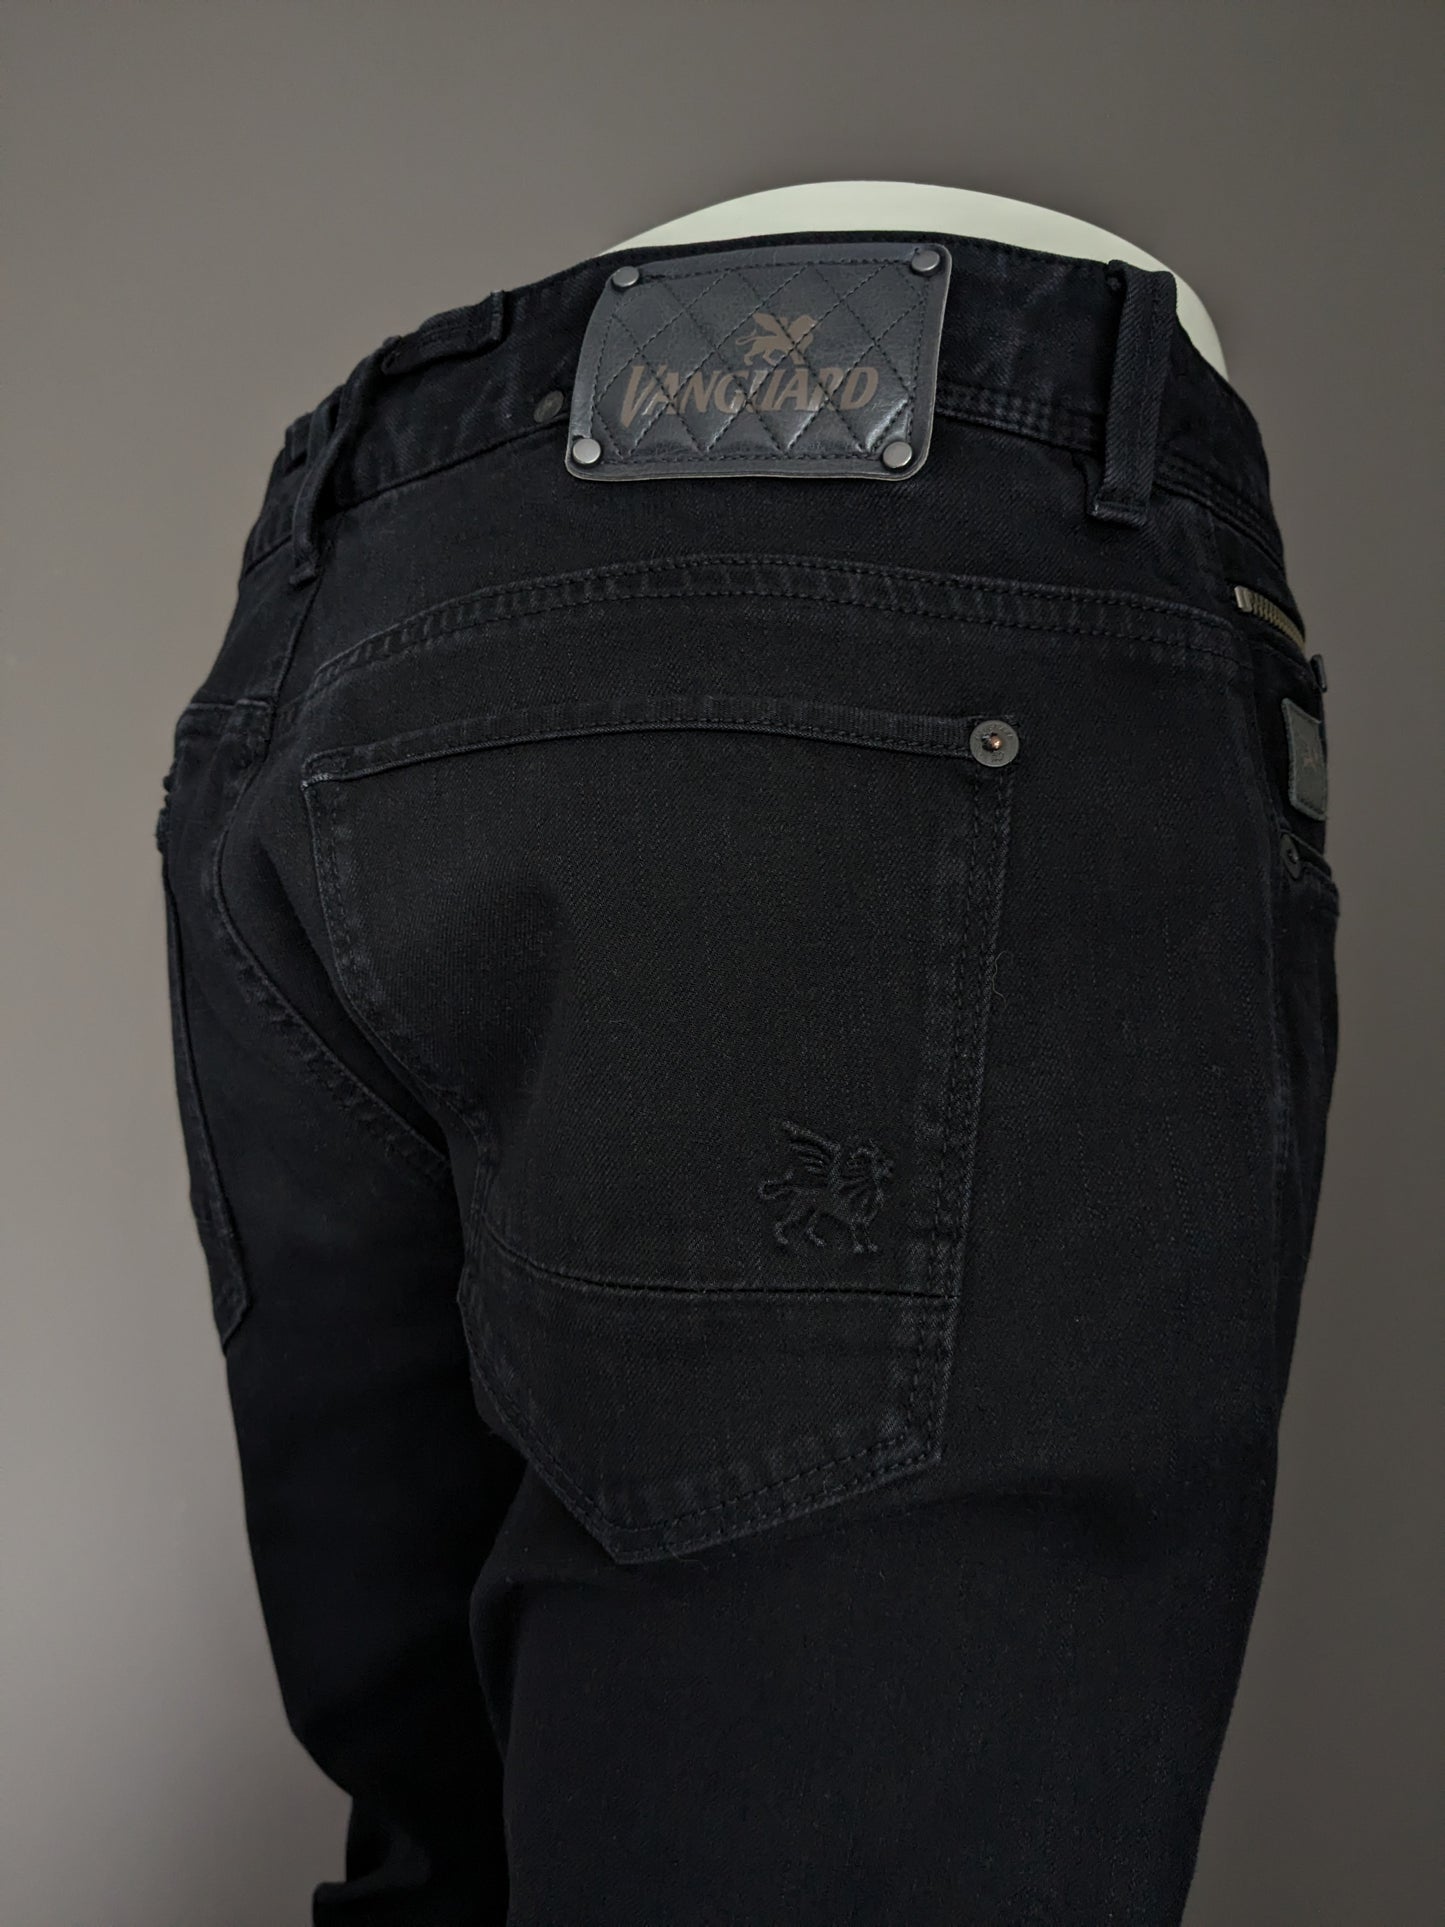 Jeans de vanguardia. Color negro. Tamaño W34 - L36. estirar. Escriba "V850 Rider". Ajustado.